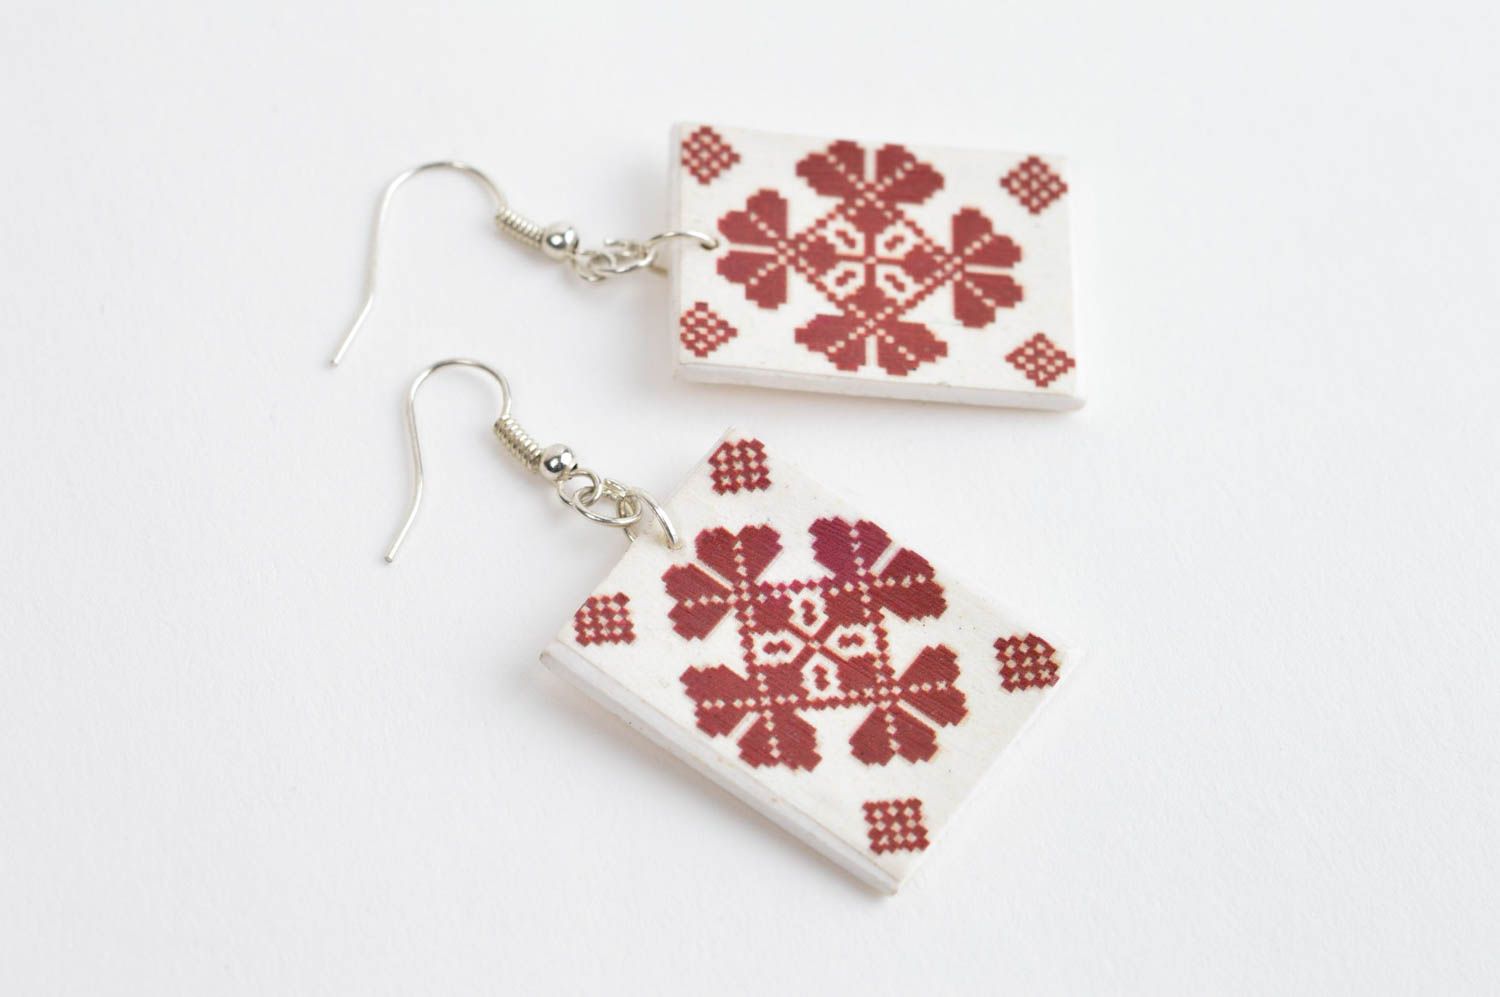 Stylish handmade wooden earrings artisan jewelry designs wood craft small gifts photo 2